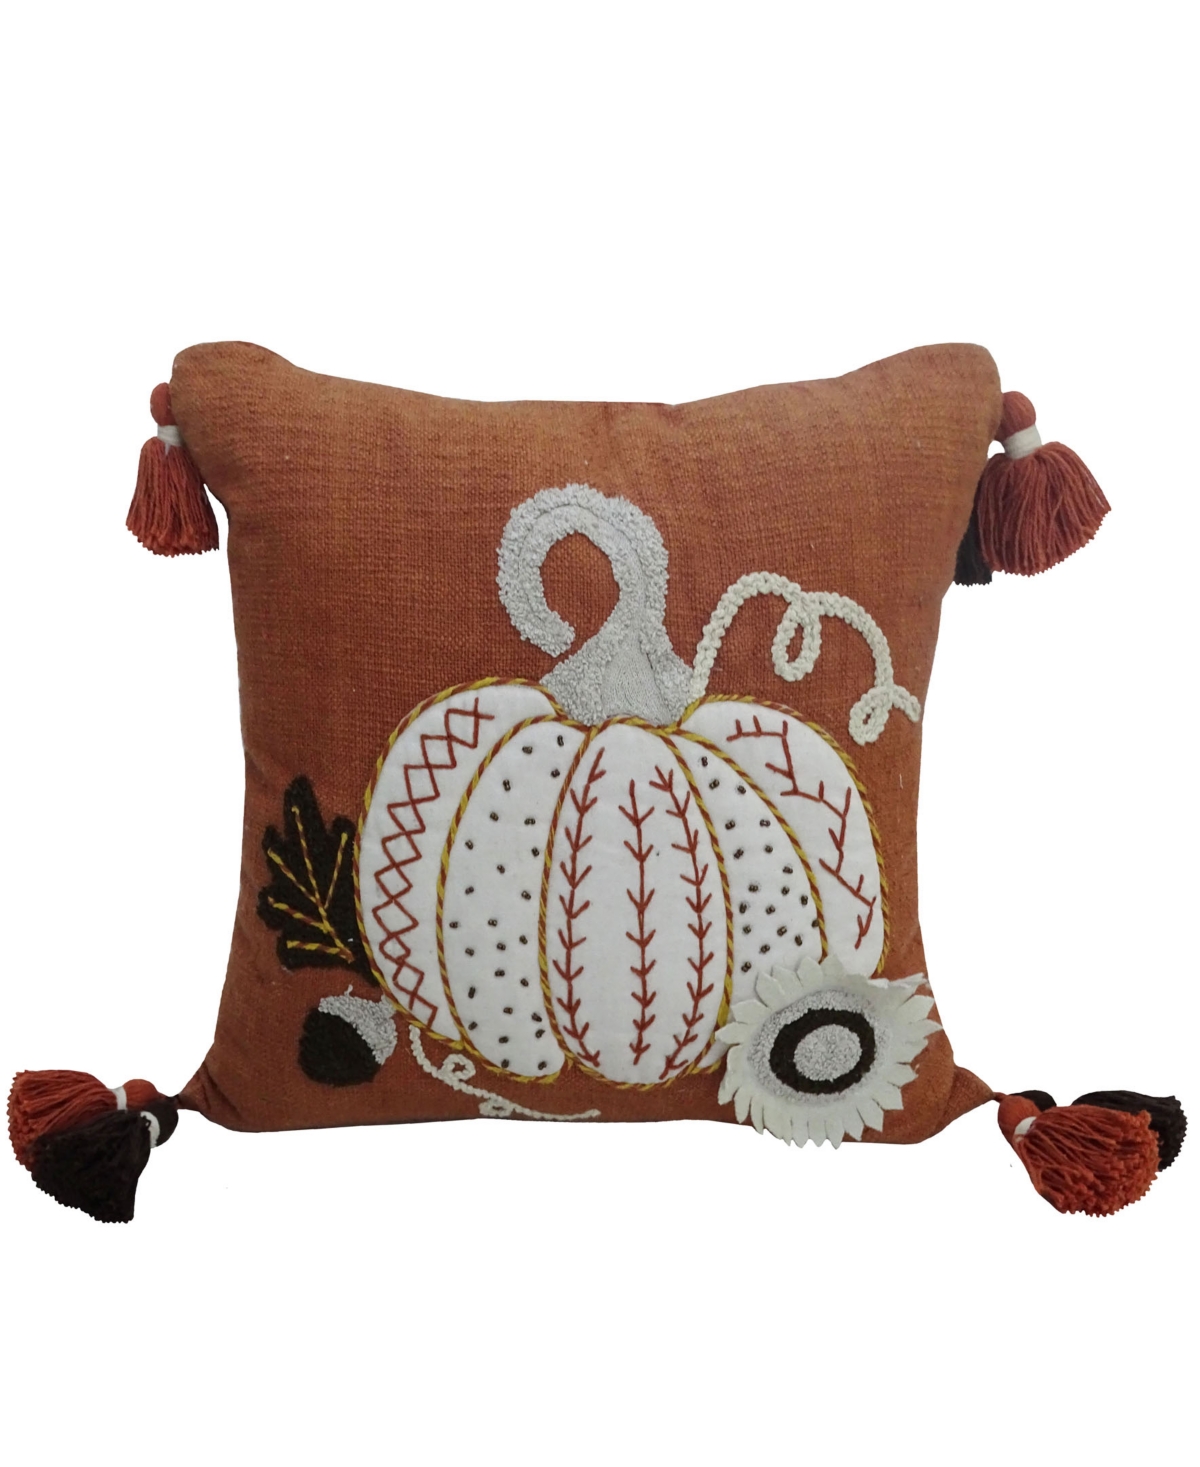 Vibhsa Pumpkin Throw Pillow With Tassels, 20" X 20" In Rust/ivory/black